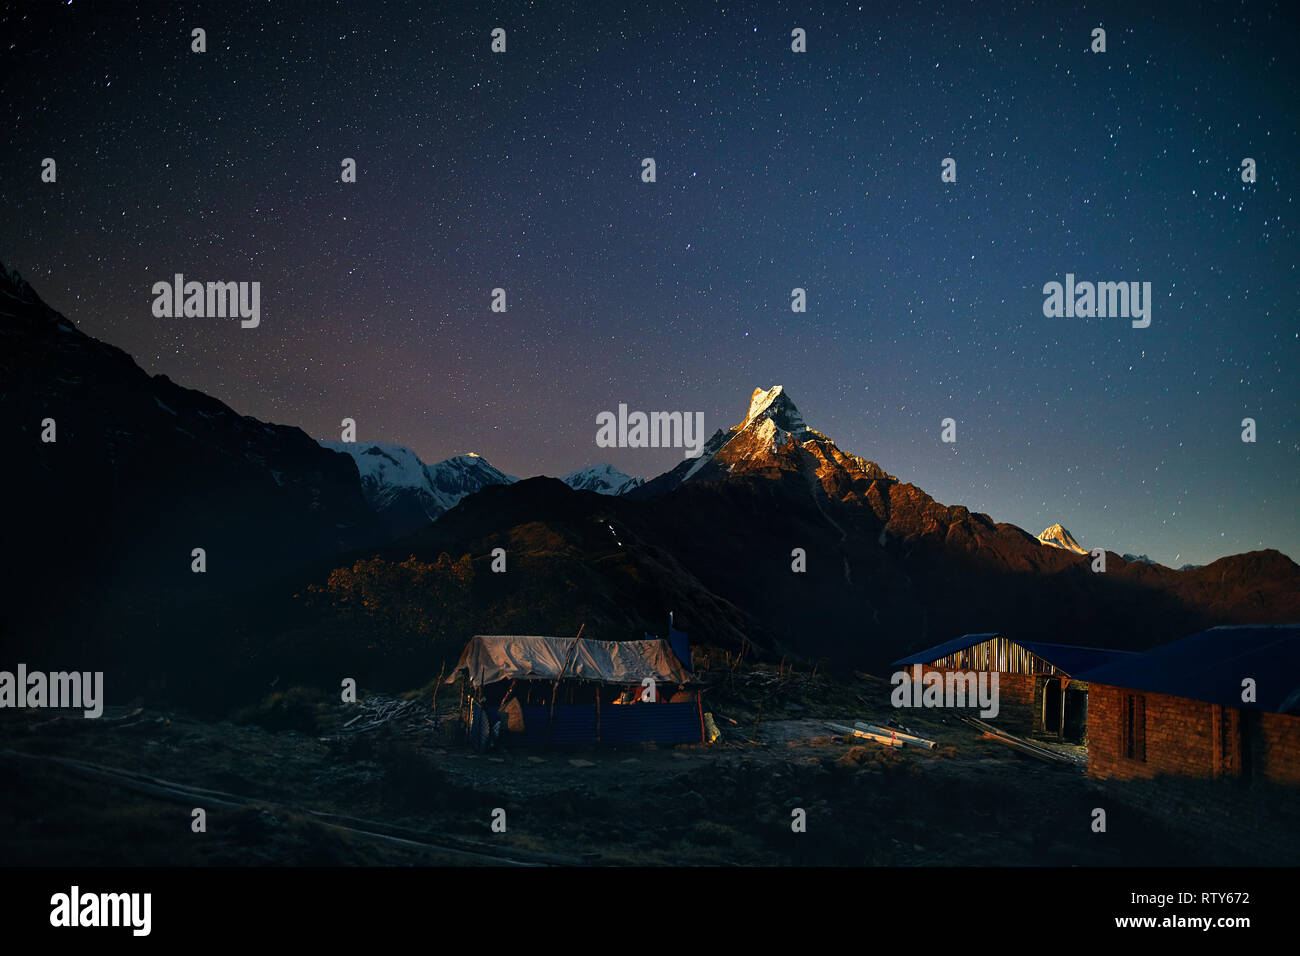 Dorf im Himalaya Berge bei Nacht Sternenhimmel in Nepal Stockfoto